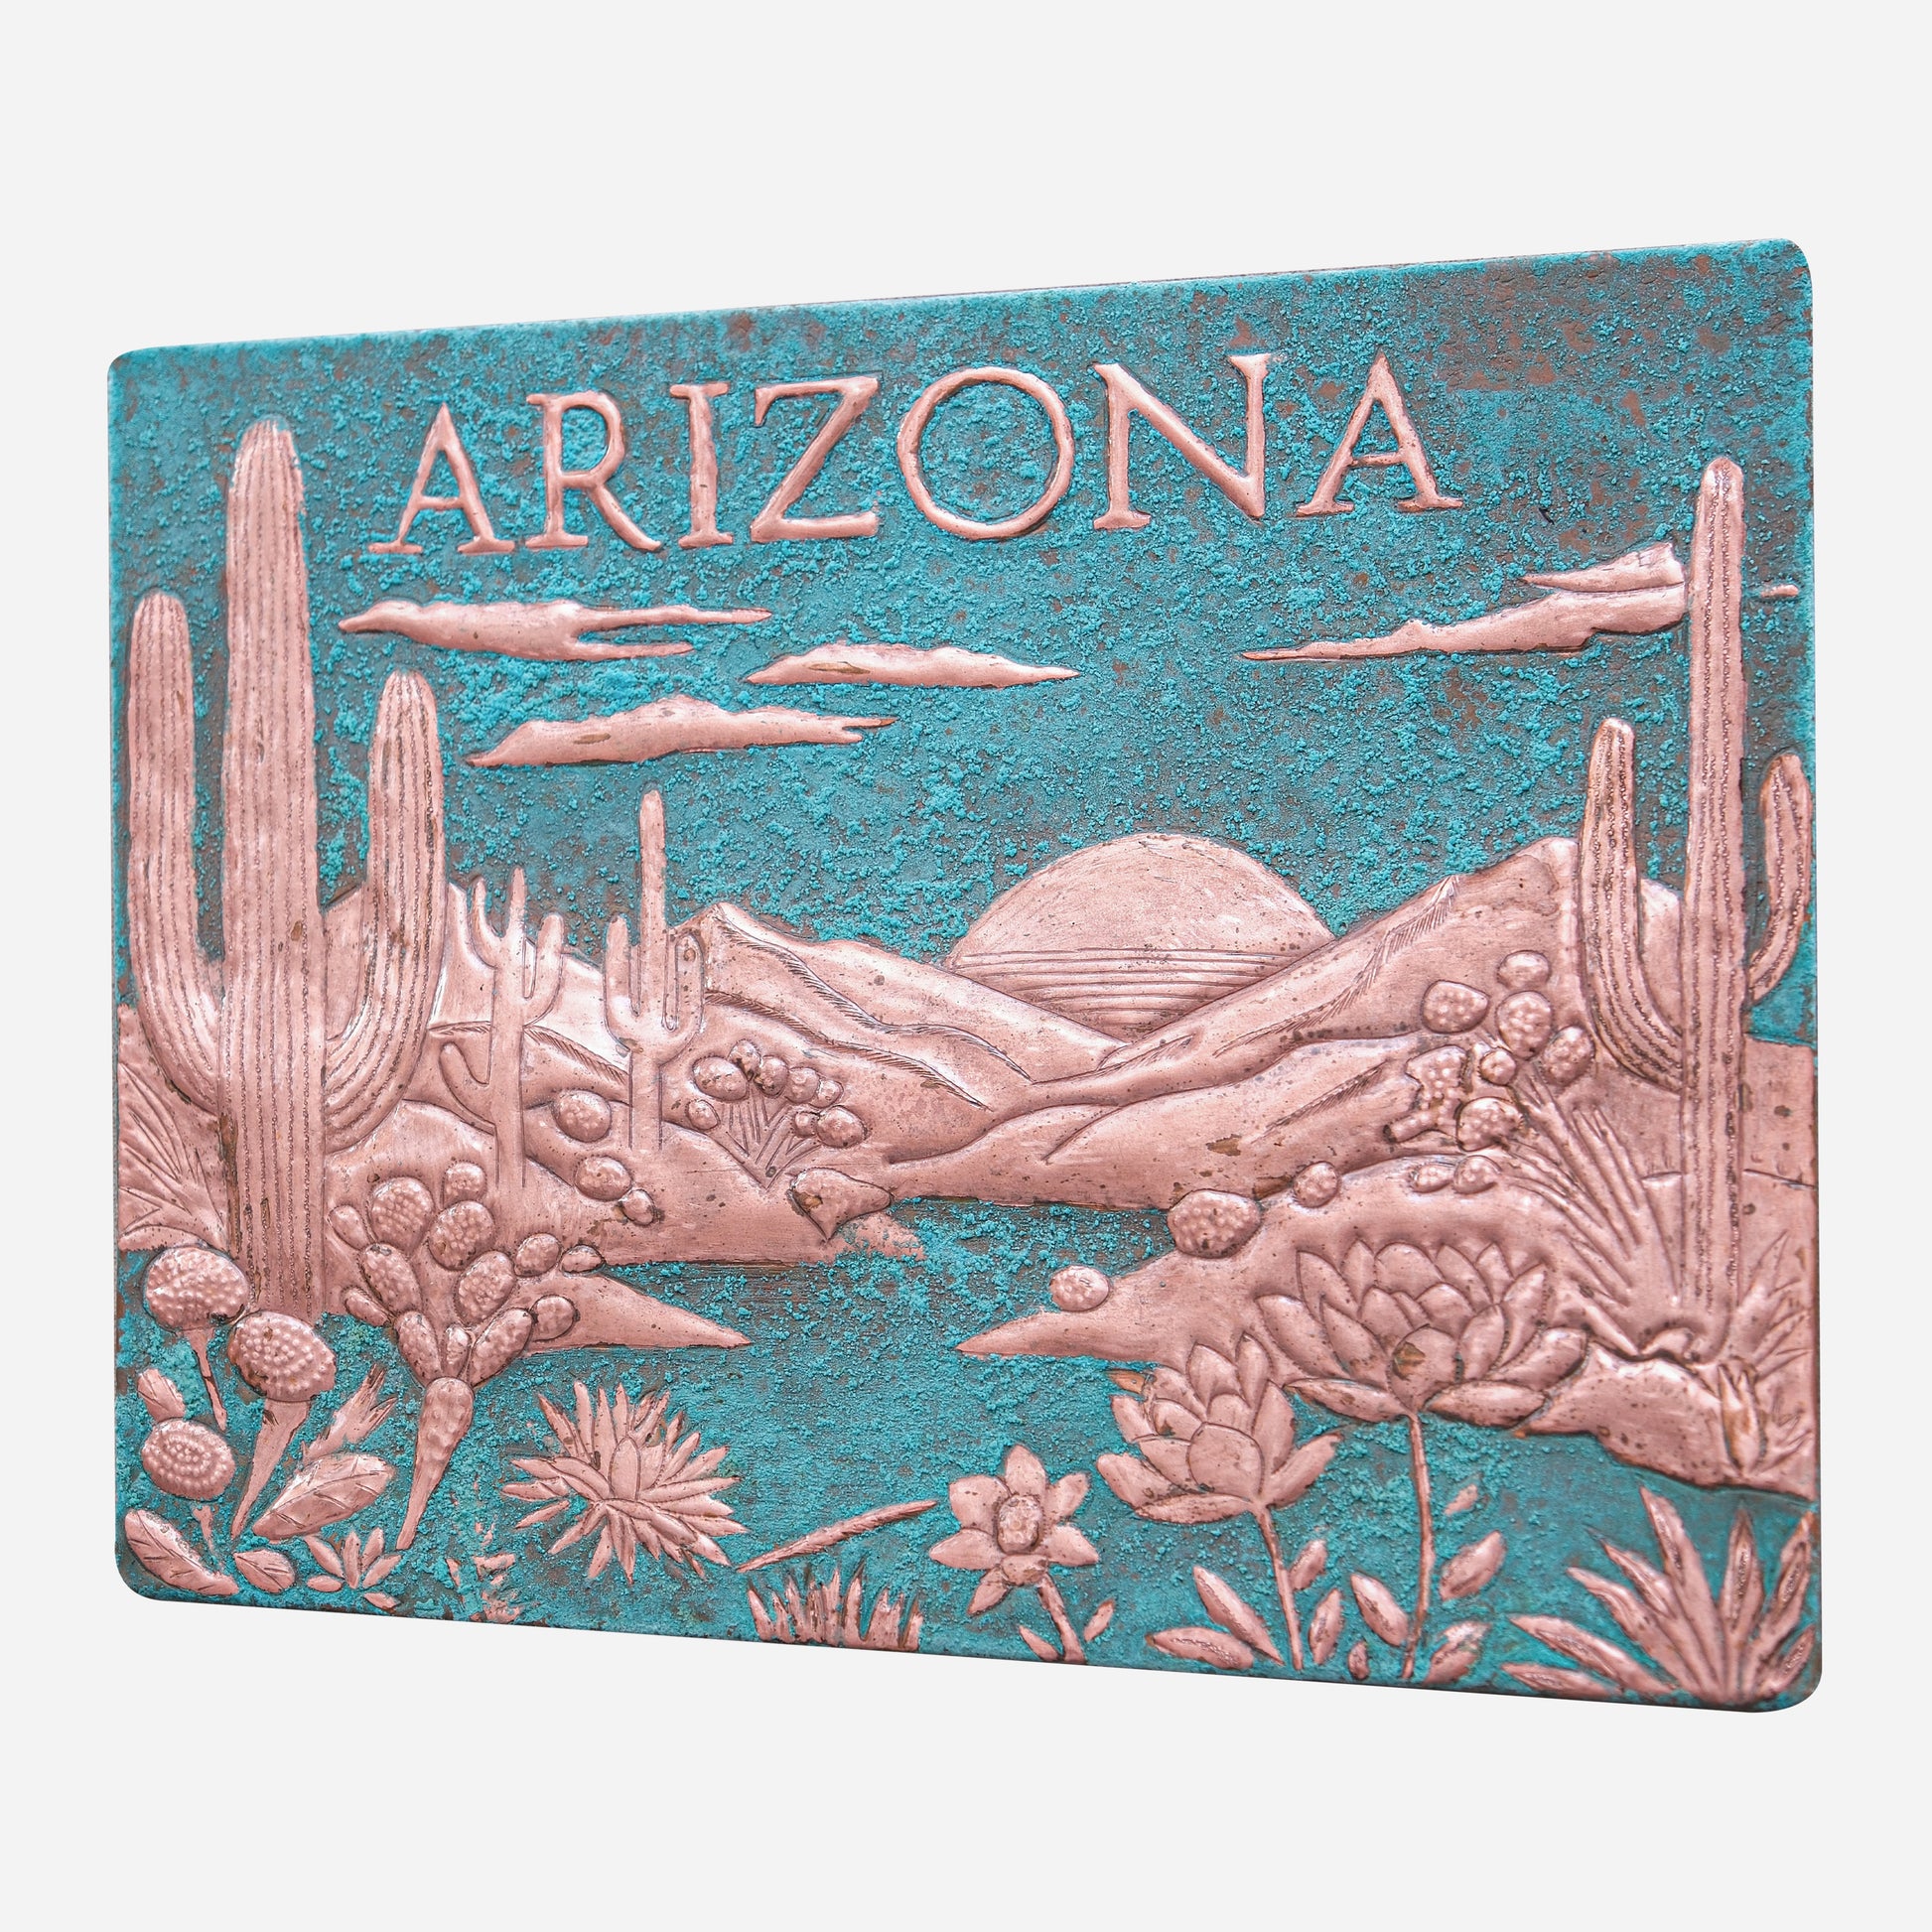 Arizona Desert Scene Kitchen Backsplash Tile